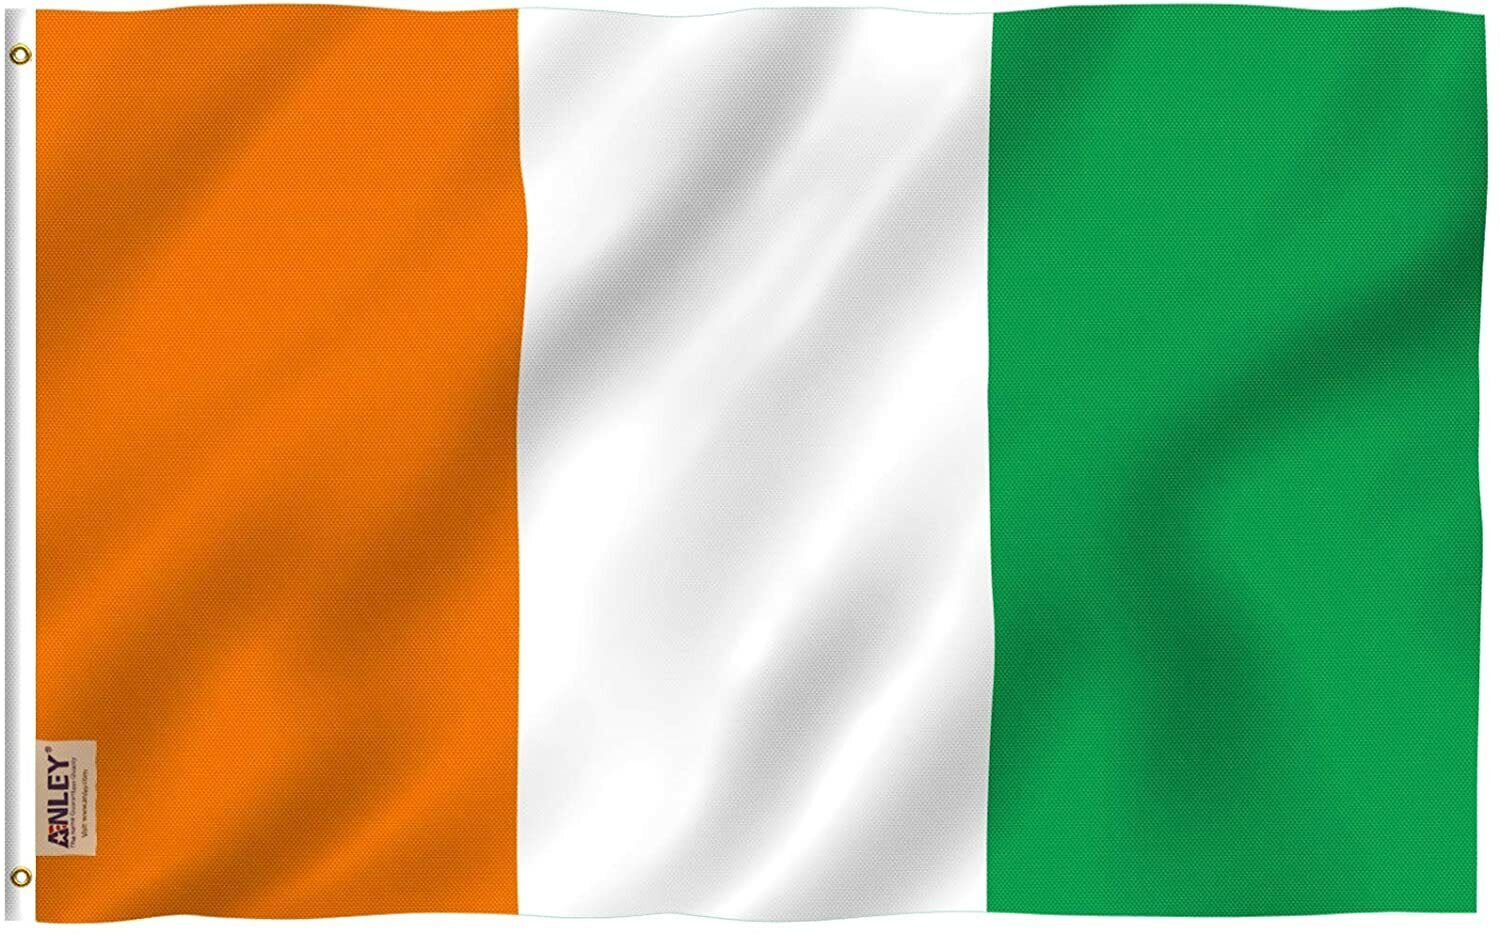 Anley Fly Breeze 3x5 Feet Ivory Coast Flag - Ivorian Flags Polyester